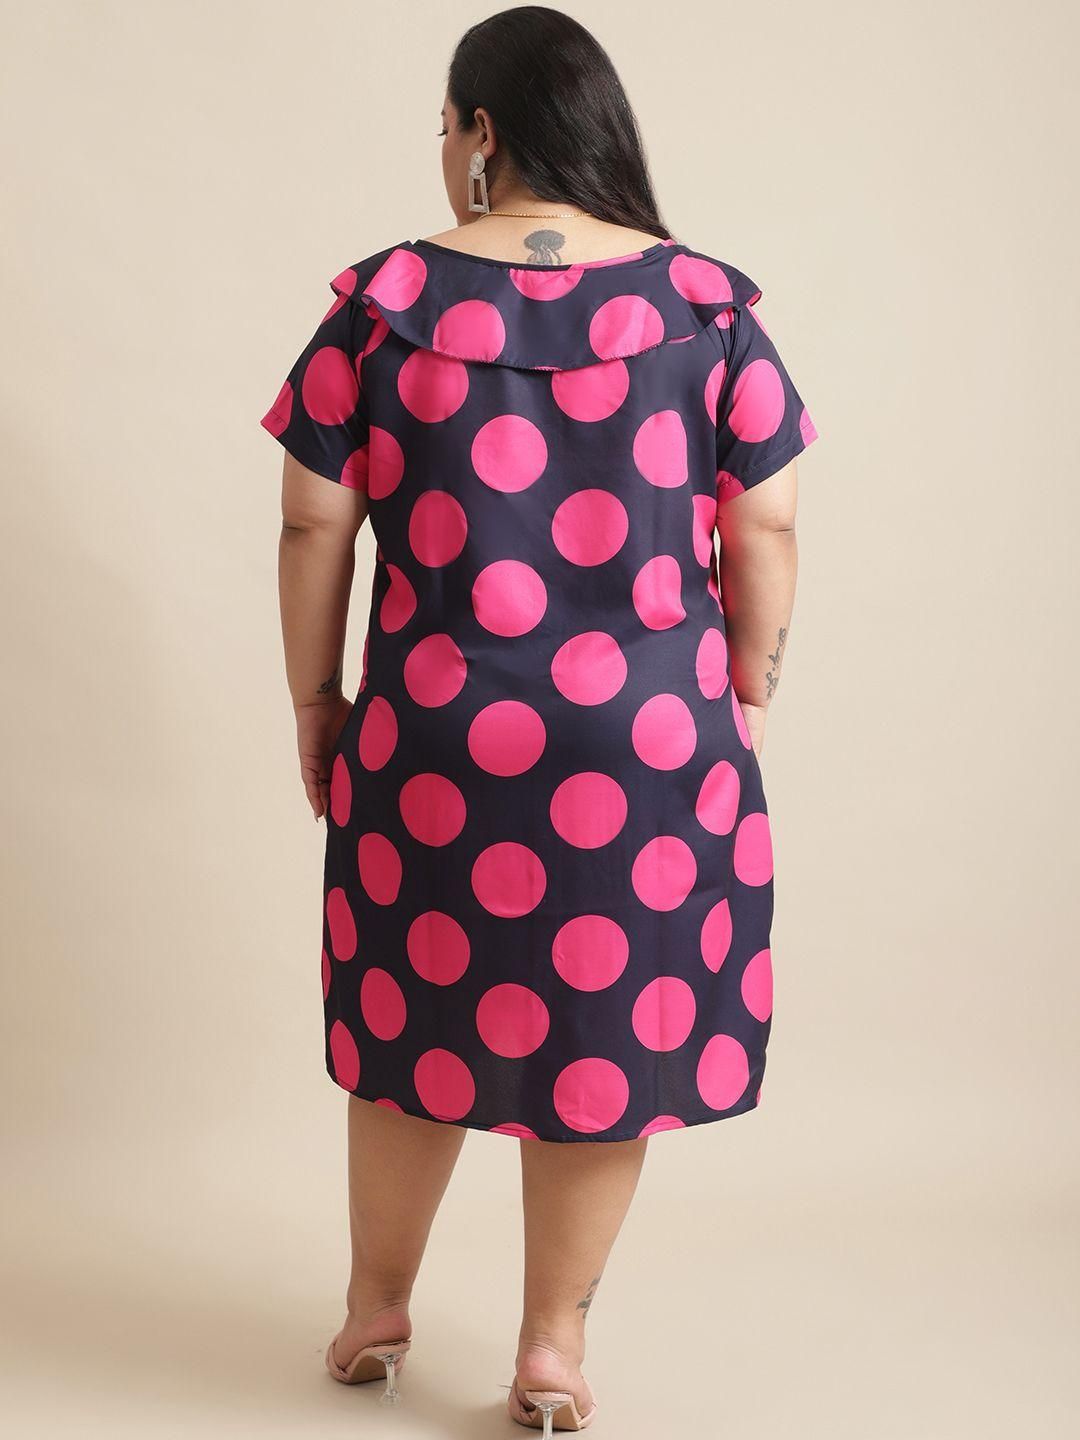 Flambeur Plus Size Polka Dot Shirt Style Short Dress for Women